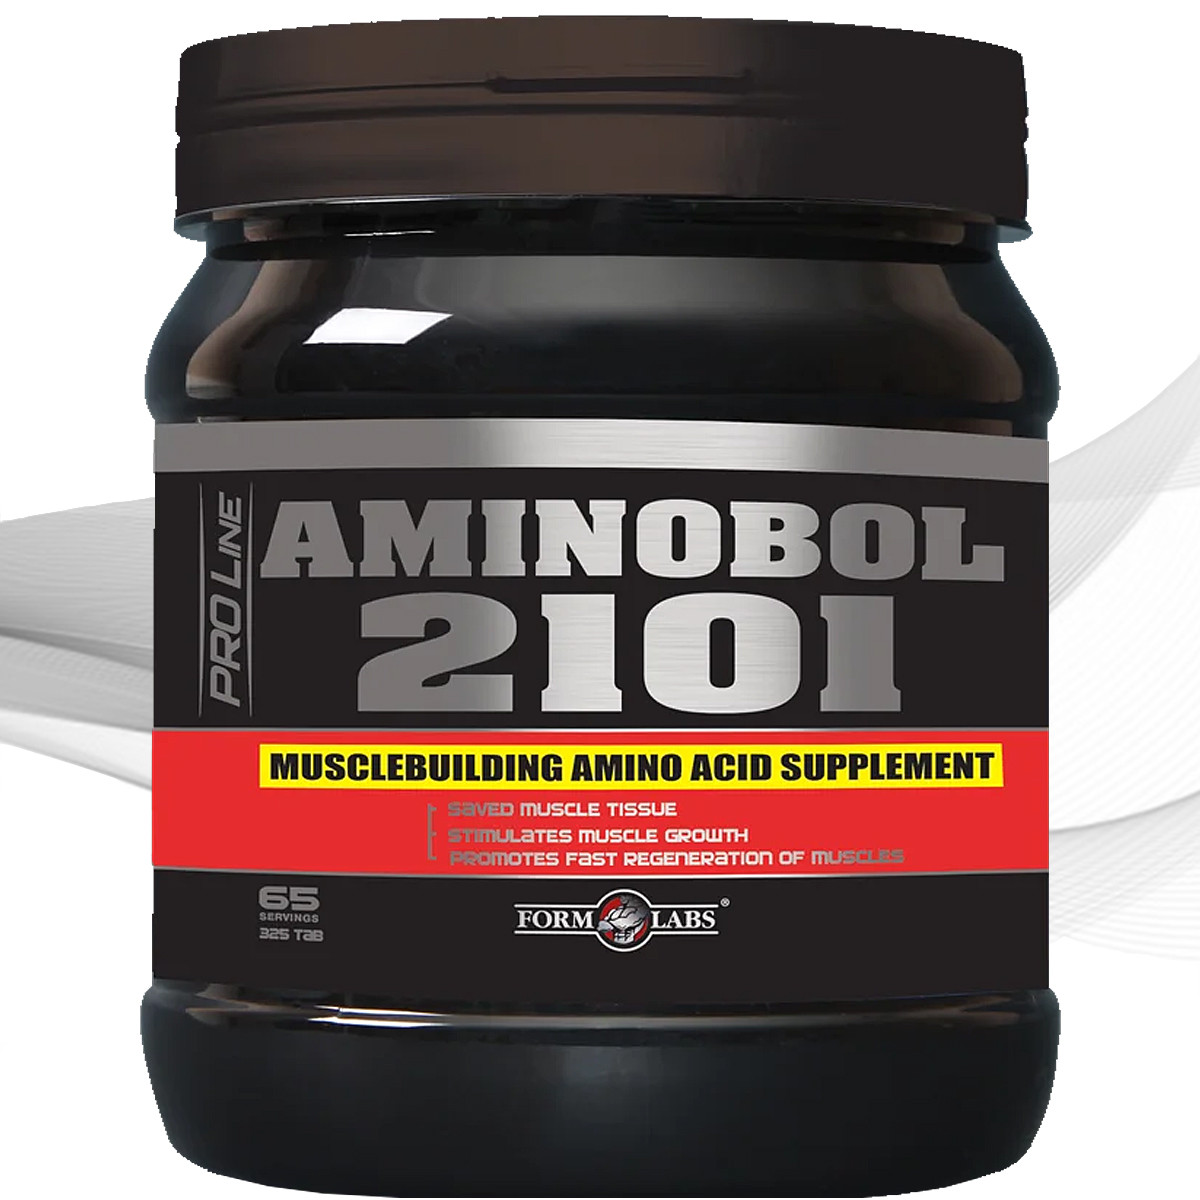 Амінокислотний комплекс FORM LABS Naturals Aminobol 2101 325 tab